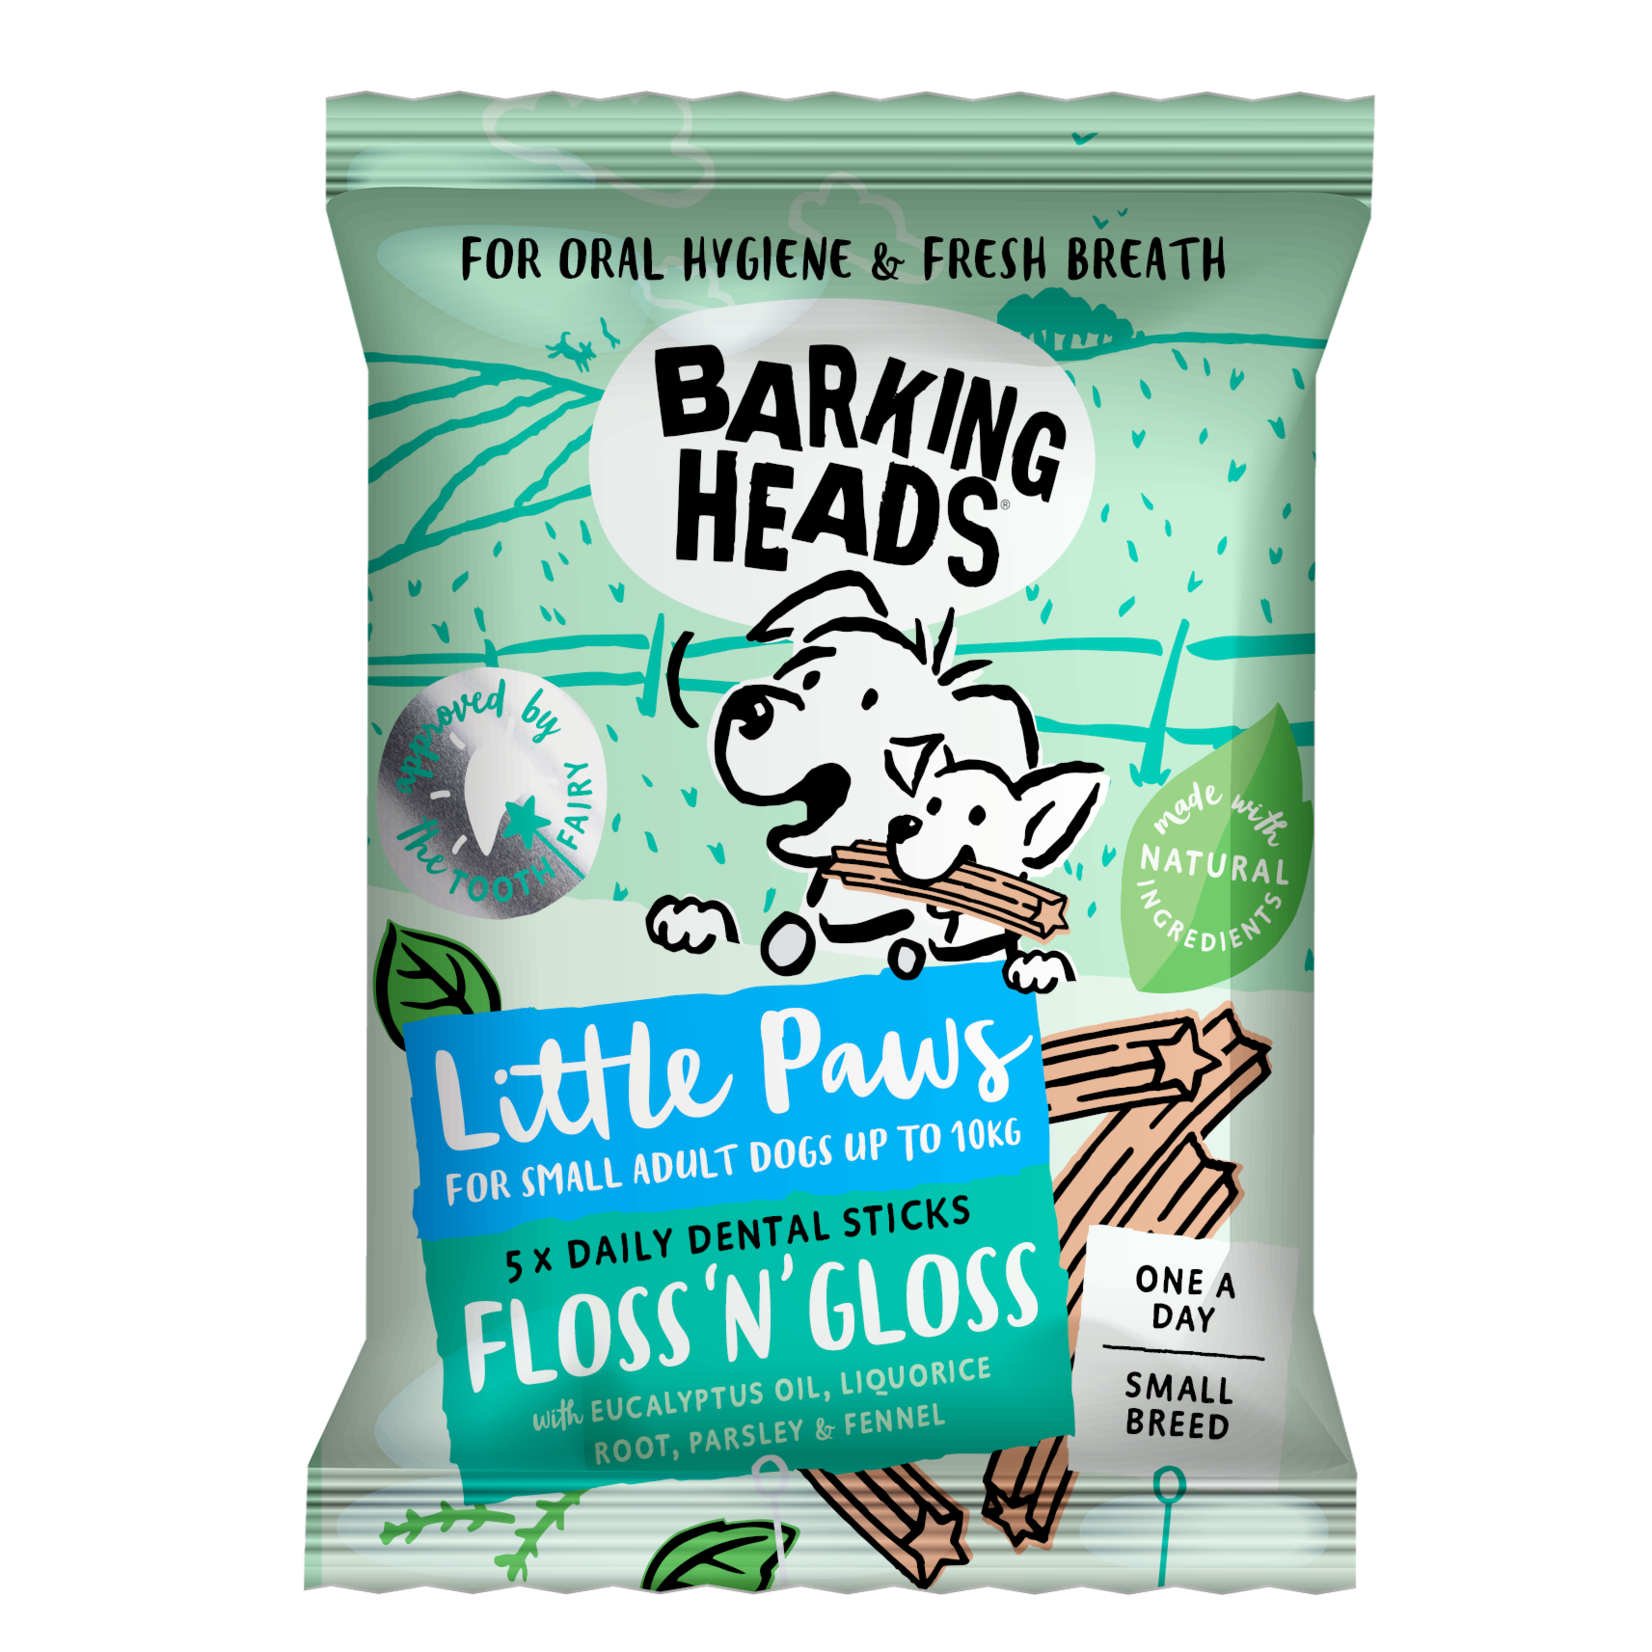 Barking Heads Floss 'n' Gloss Grain Free Daily Dental Stick Dog Chews, 5 pack